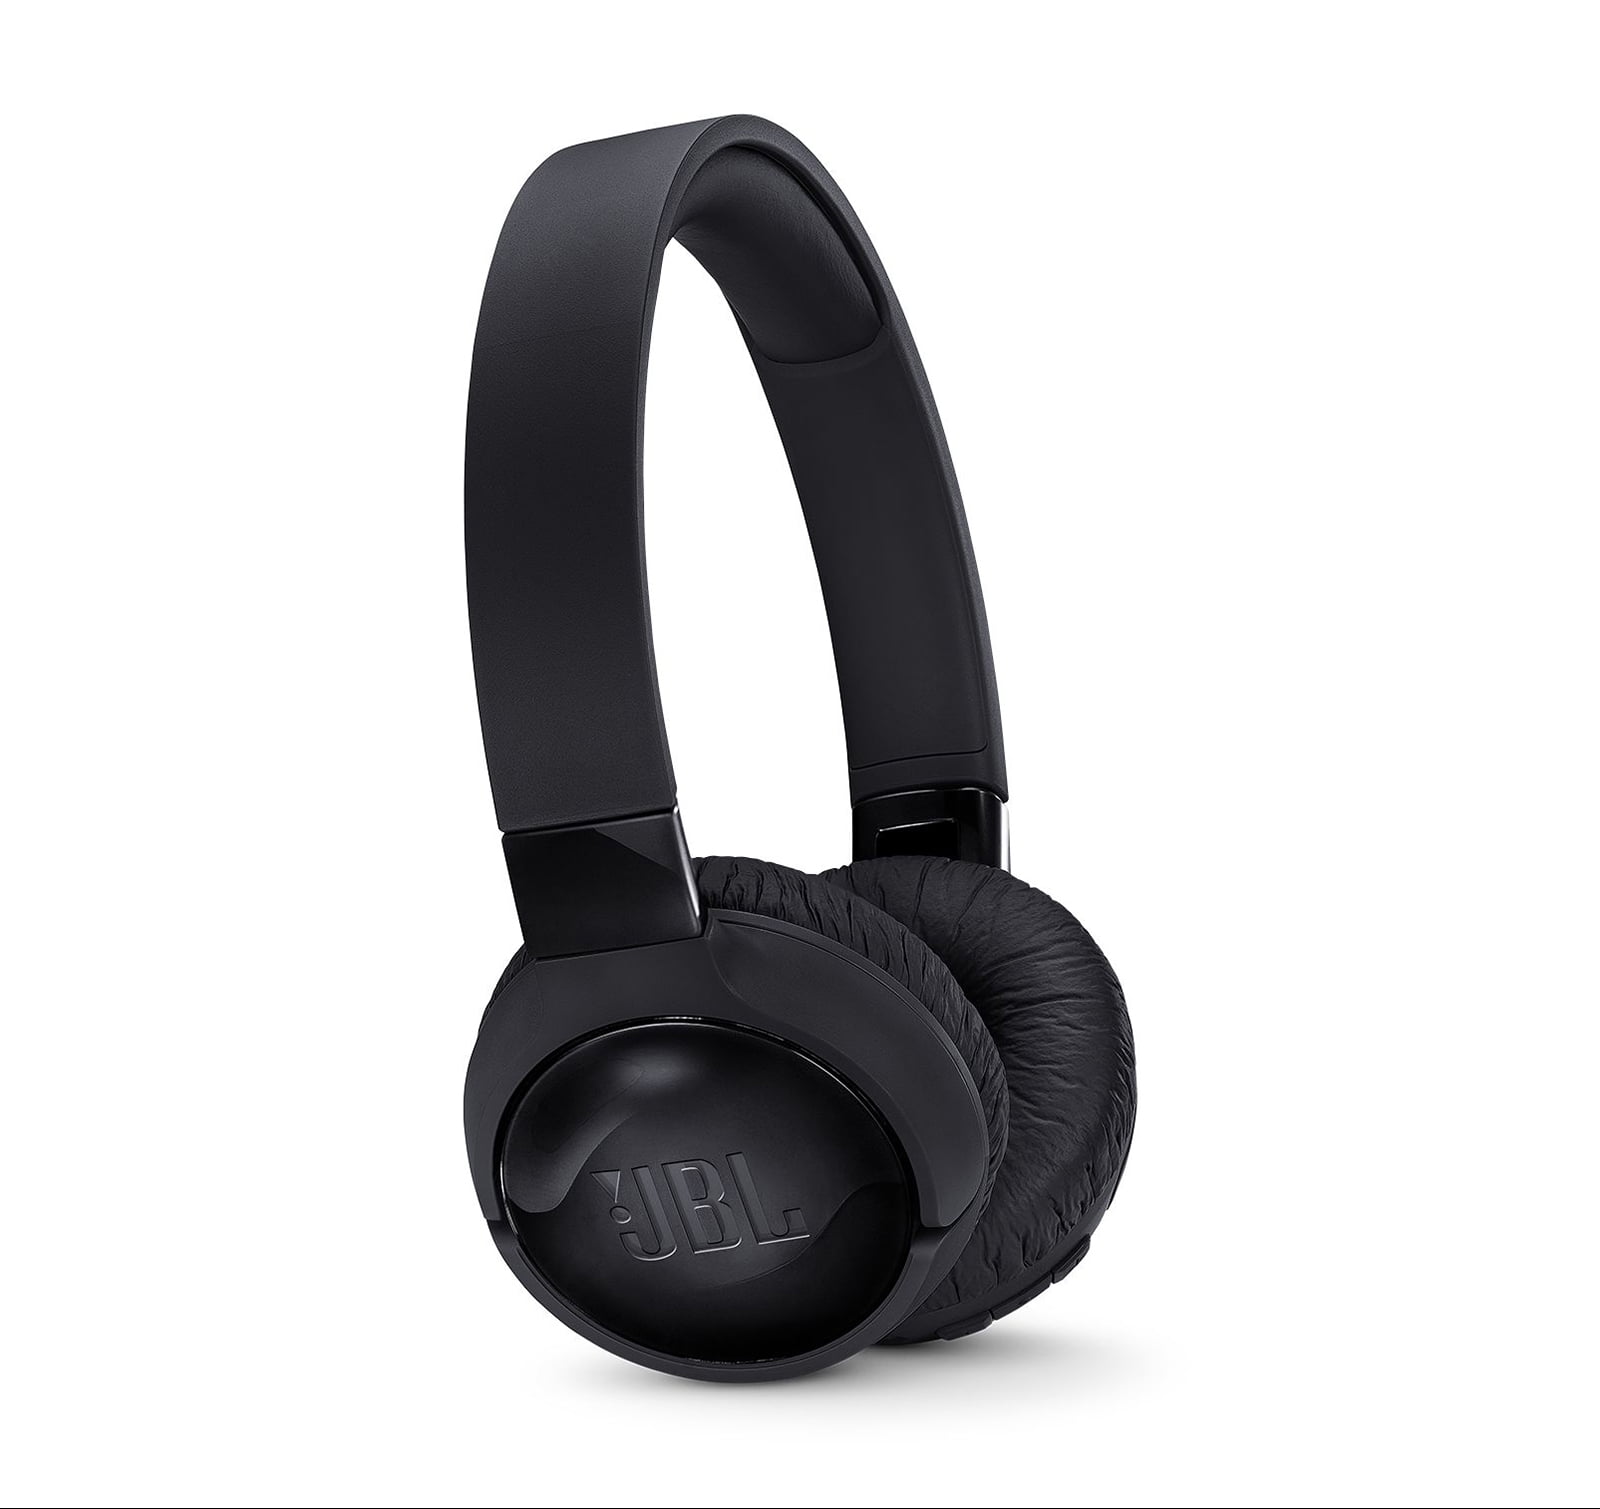 JBL 600 BTNC Open Box Black Over-Ear Wireless Headphones Walmart.com